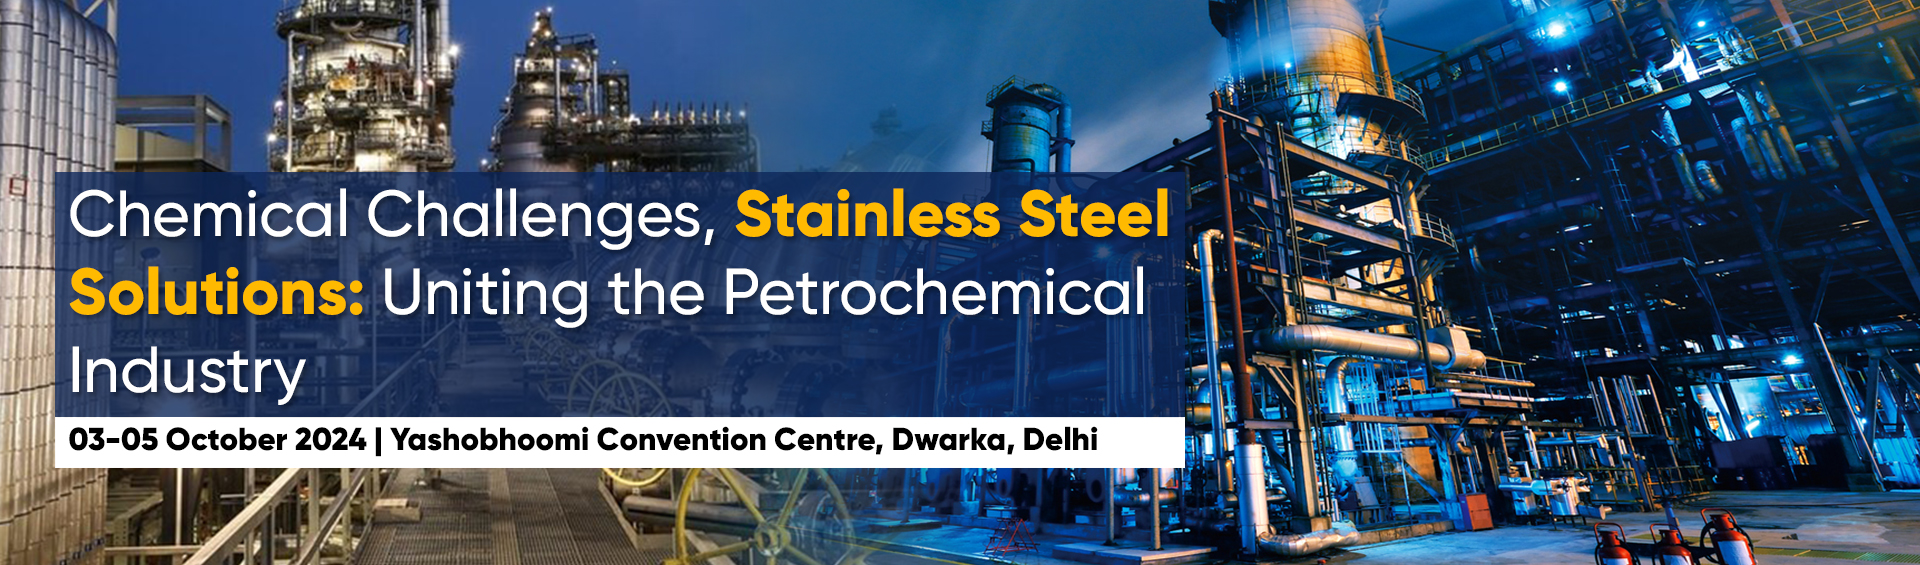 International Stainless Steel Exhibition